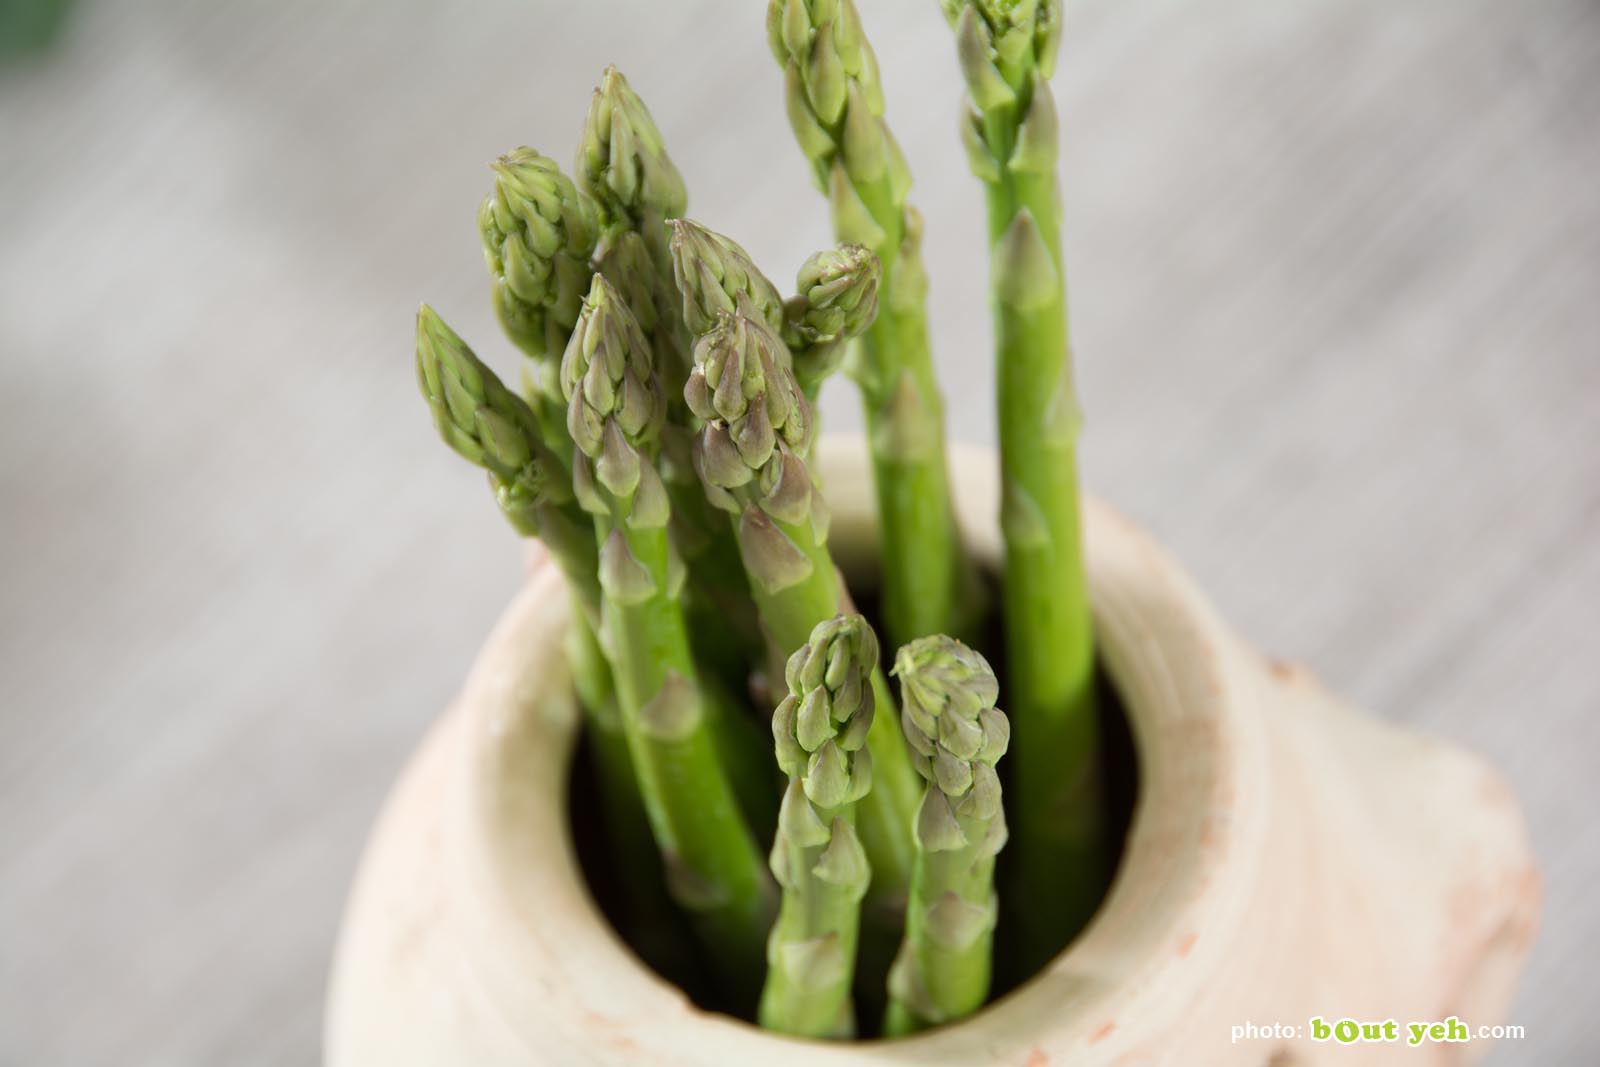 Food photographers Belfast portfolio photo 3365 - fresh asparagus tips